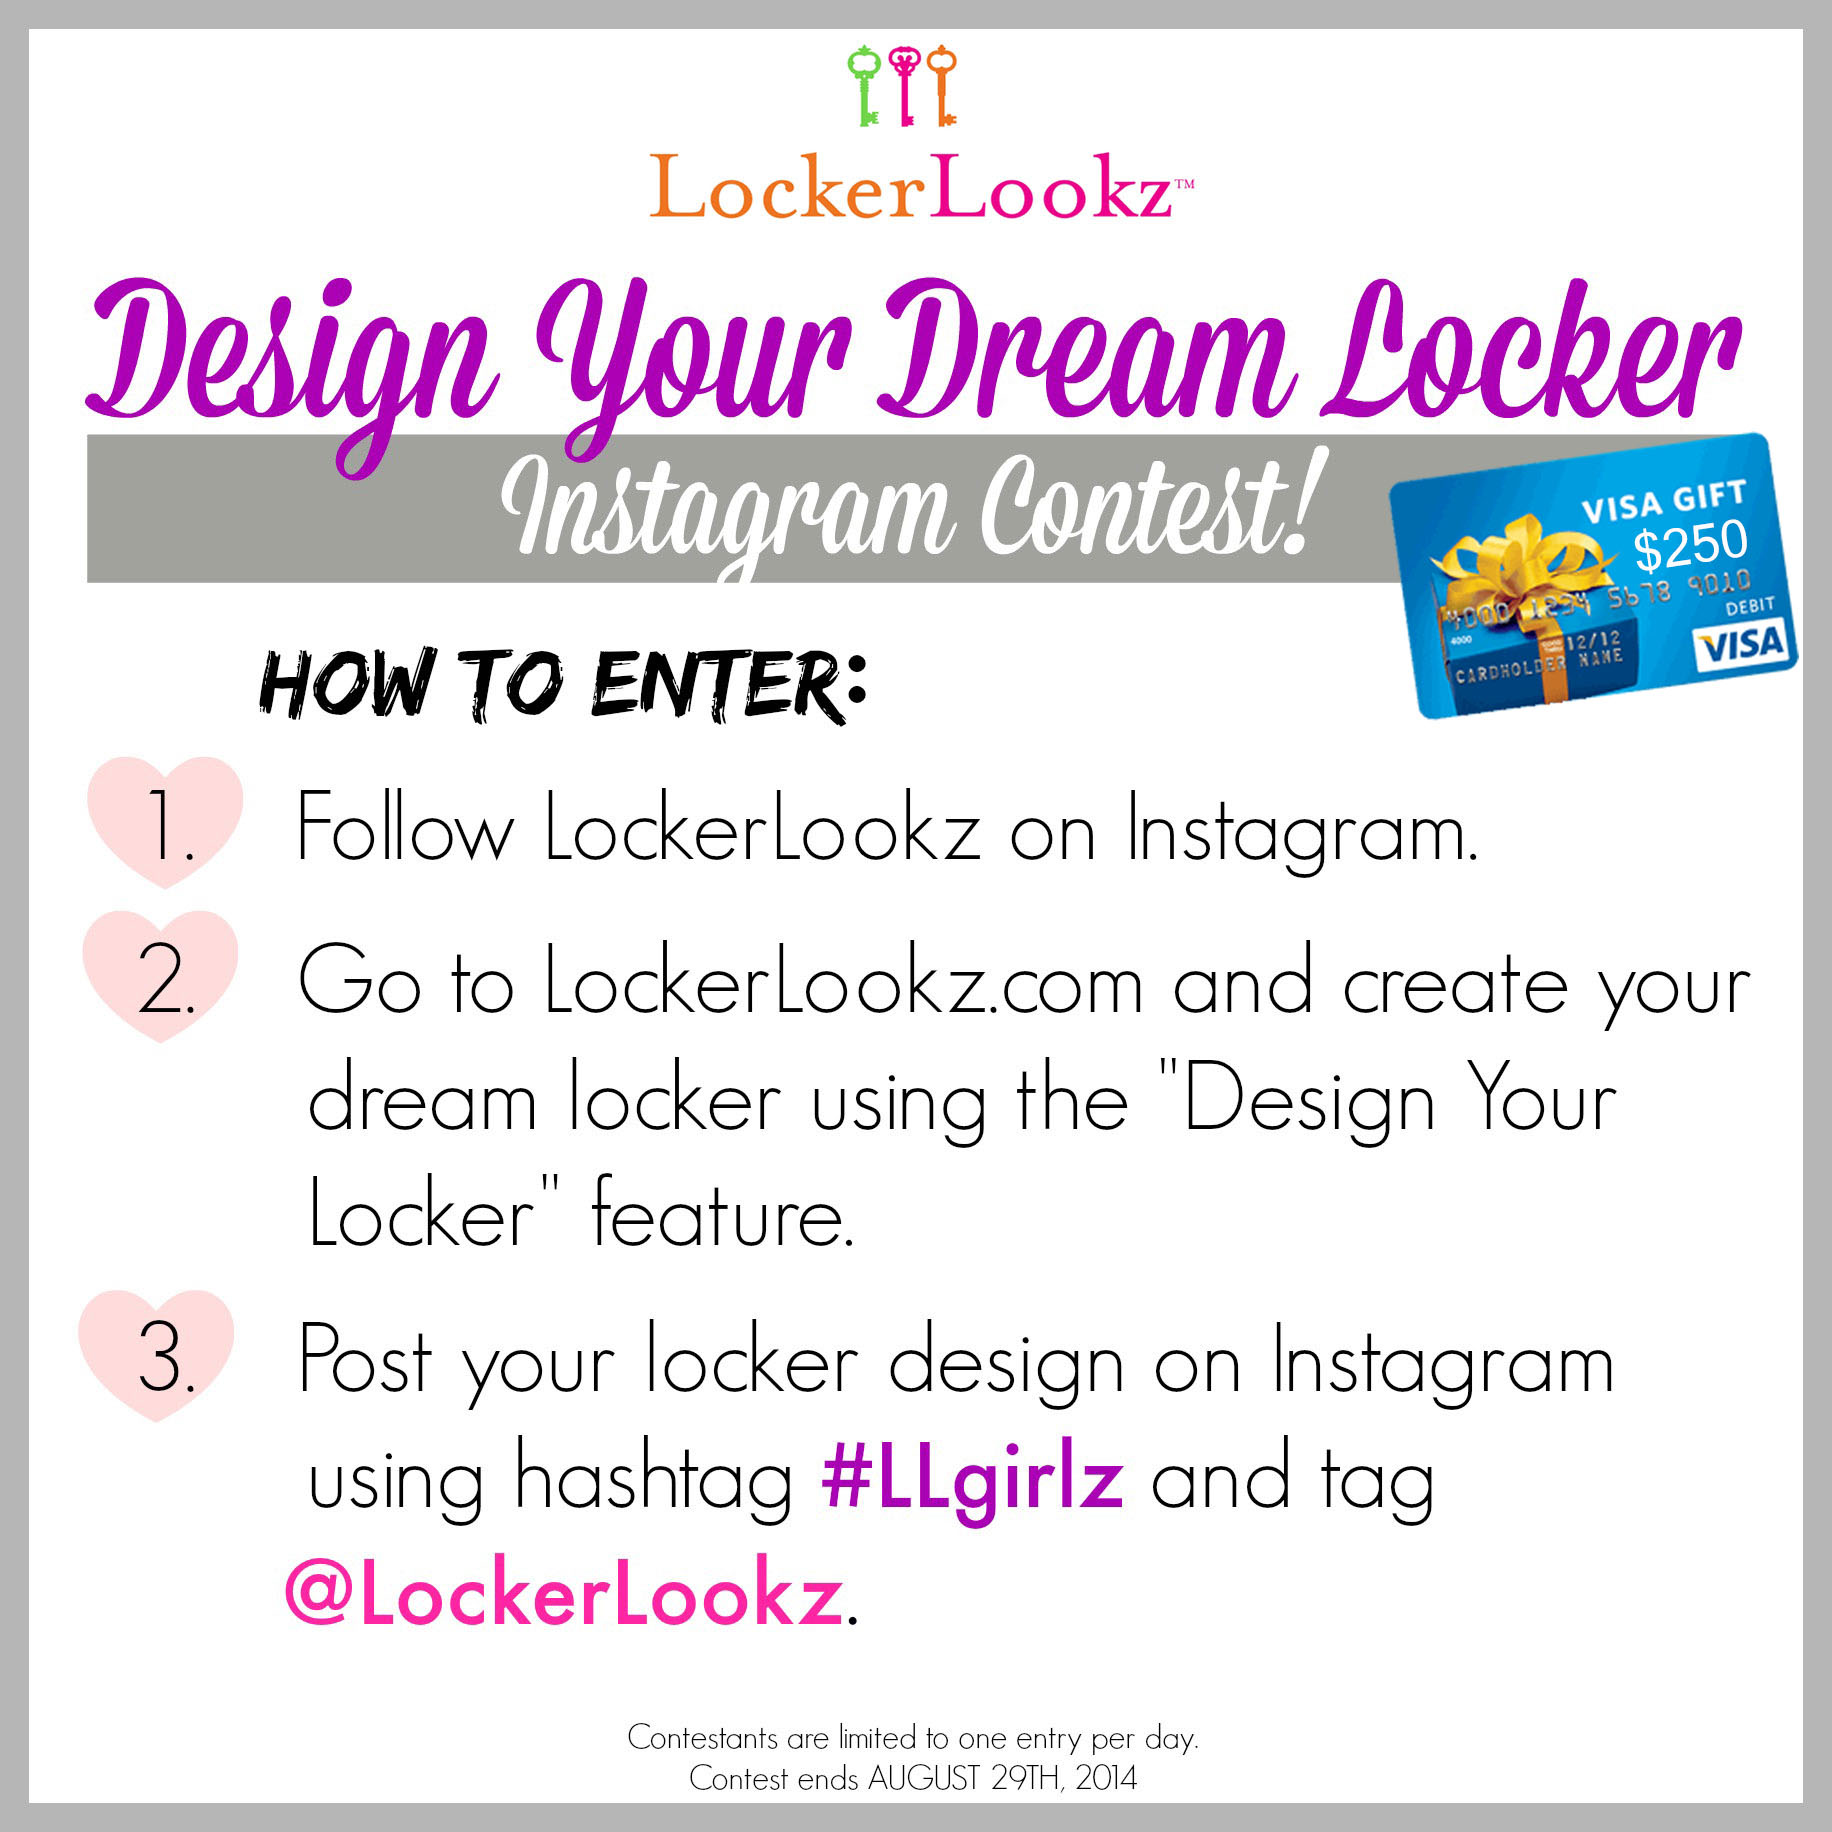 LockerLookz-Instagram-Contest-IMAGE